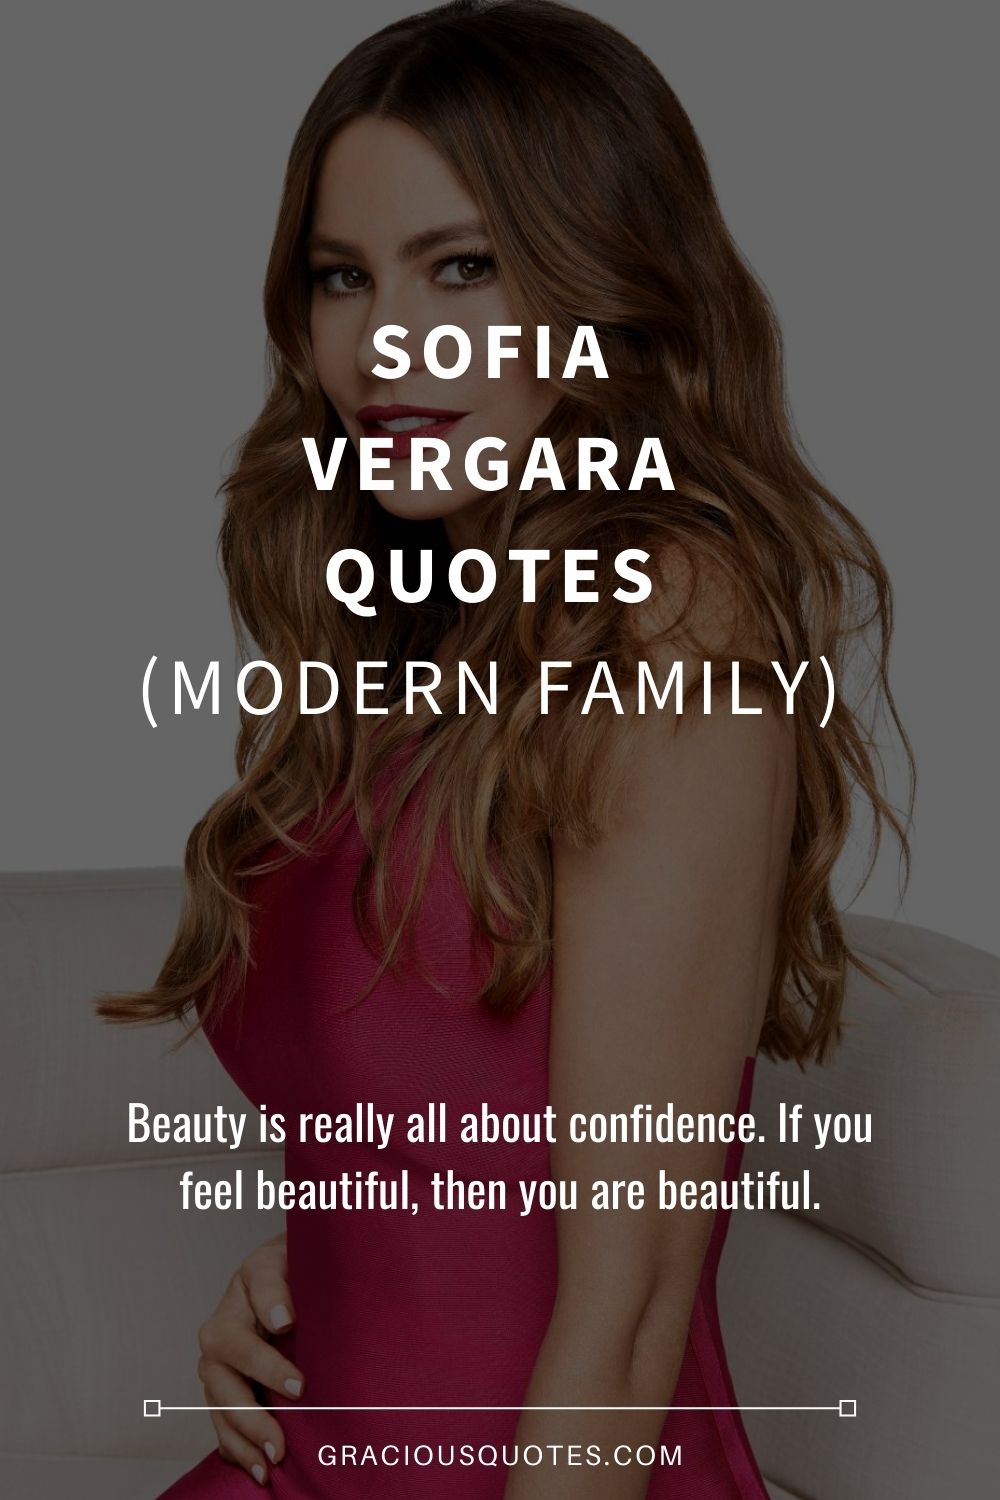 Sofia Vergara Quotes (MODERN FAMILY) - Gracious Quotes